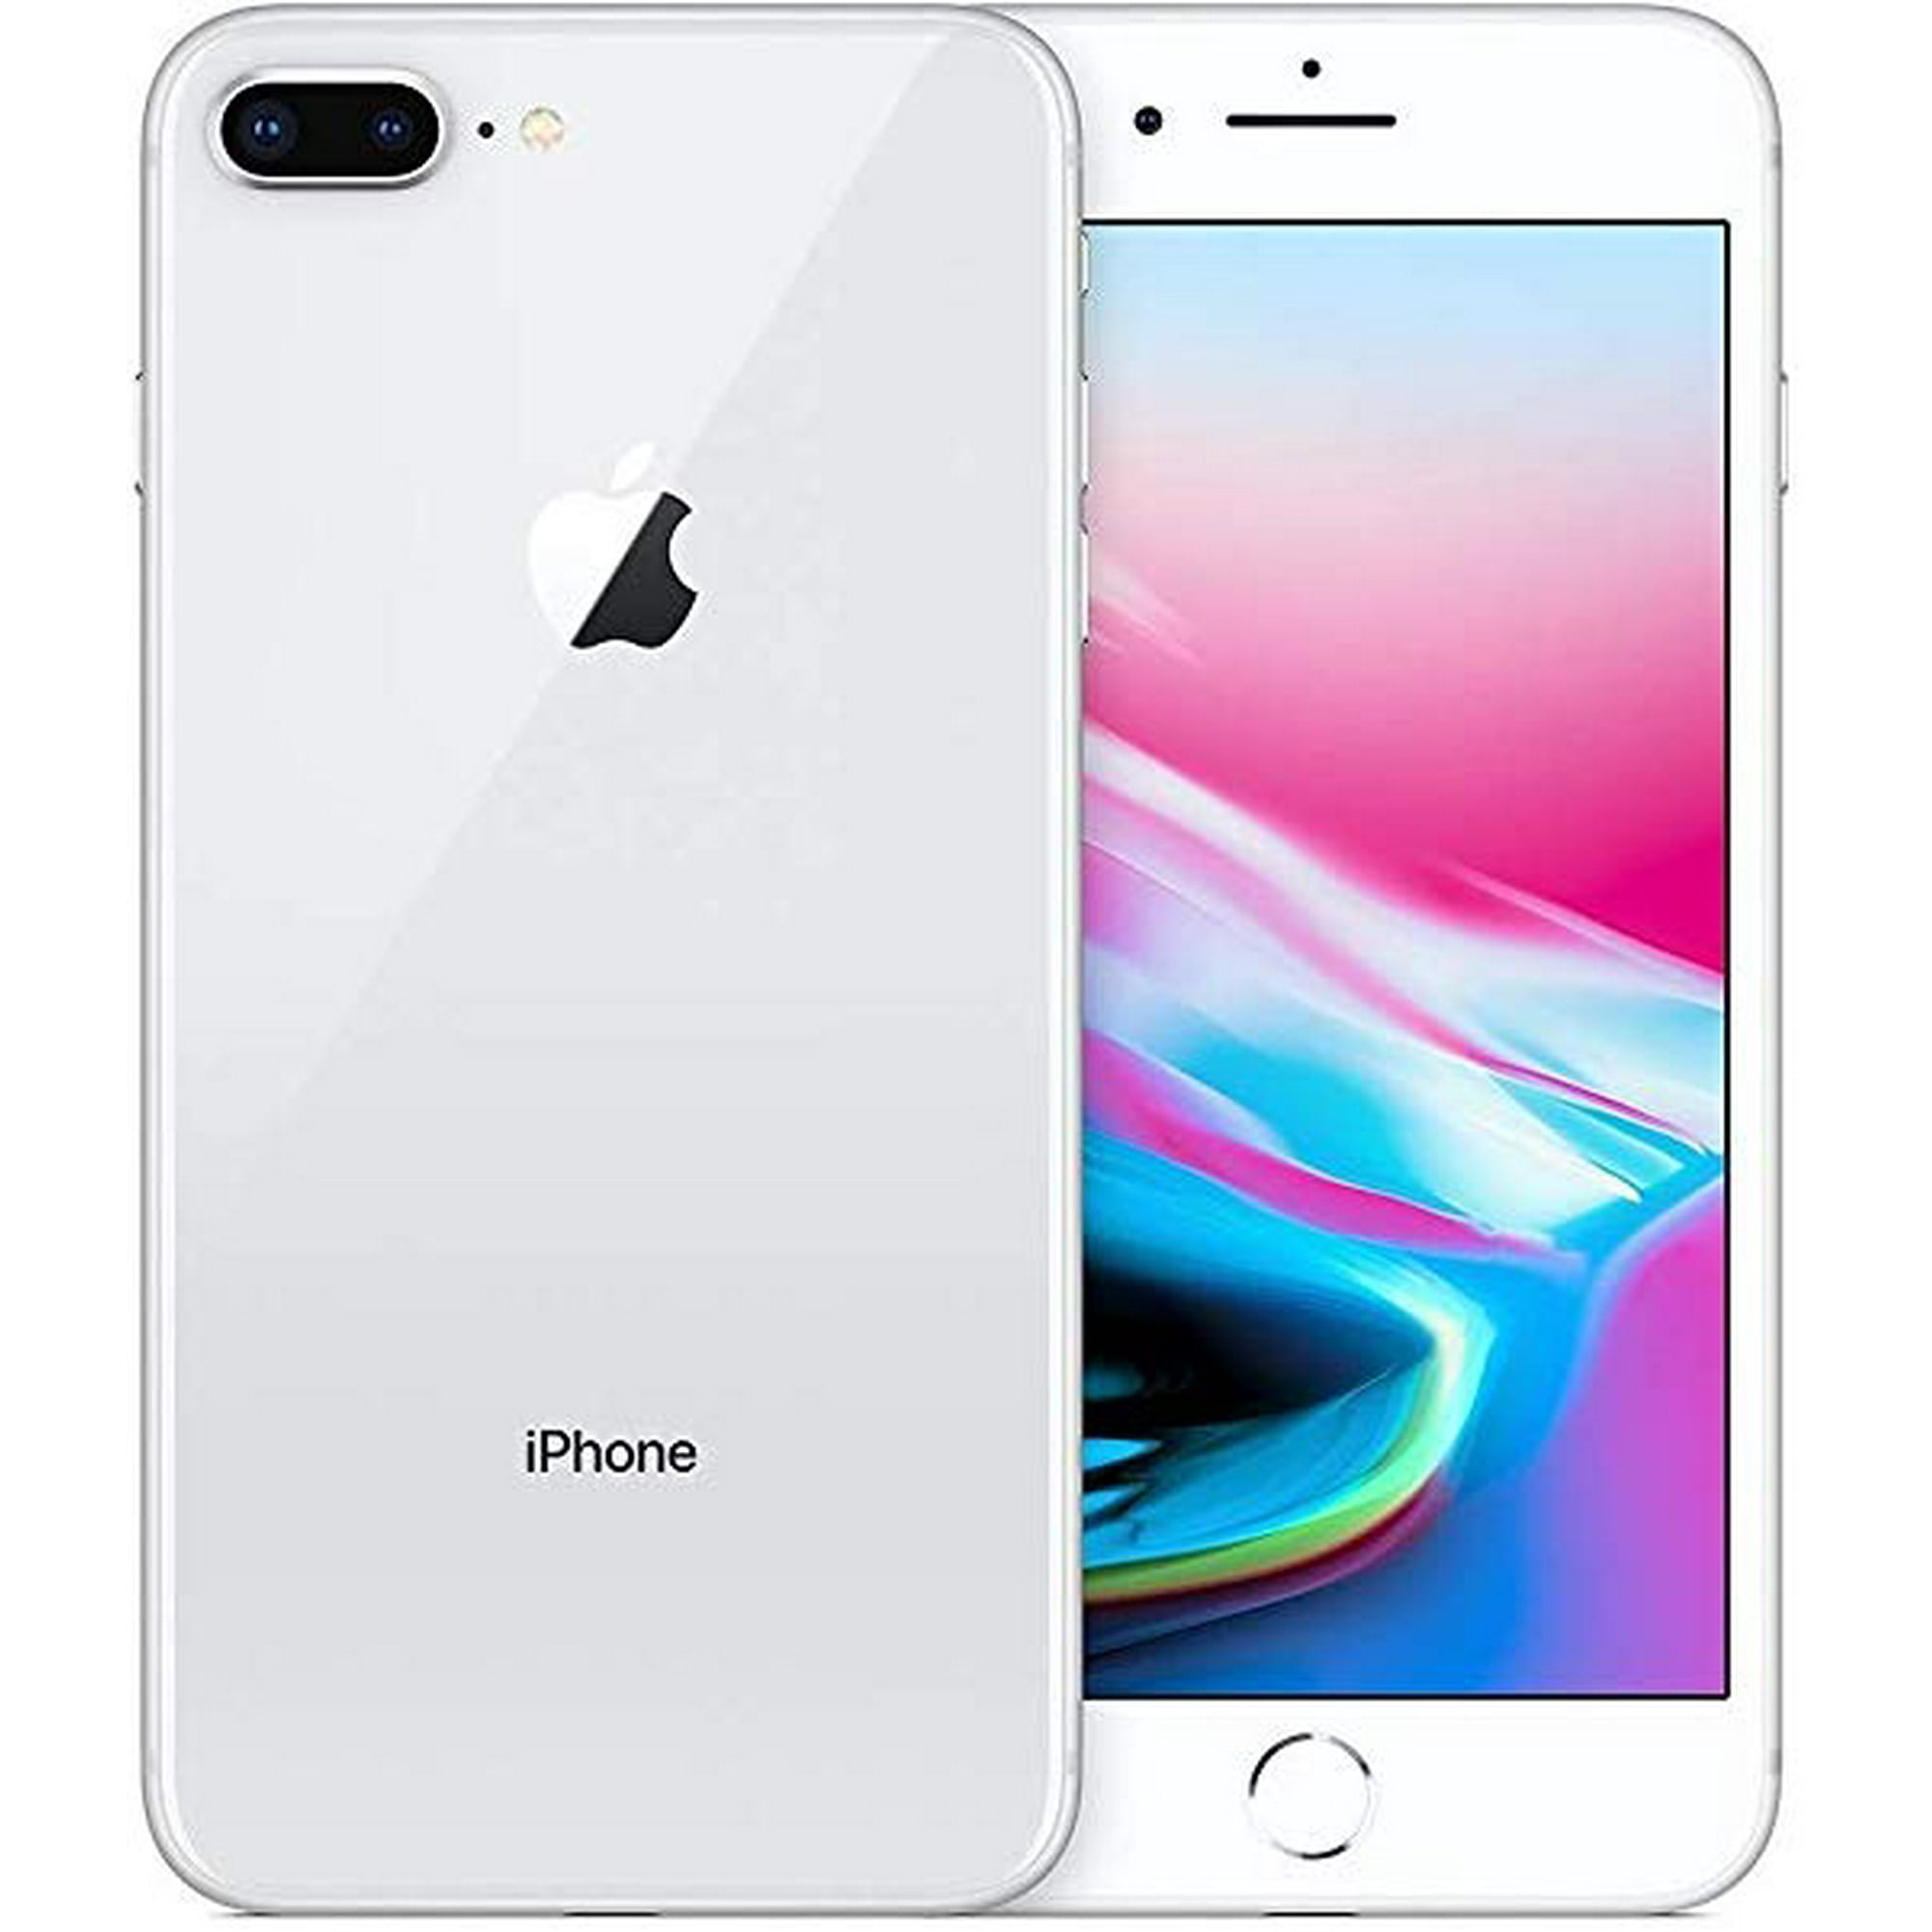 Apple Iphone 8 Plus, 64GB Storage, GSM Factory Unlocked Smartphone ...